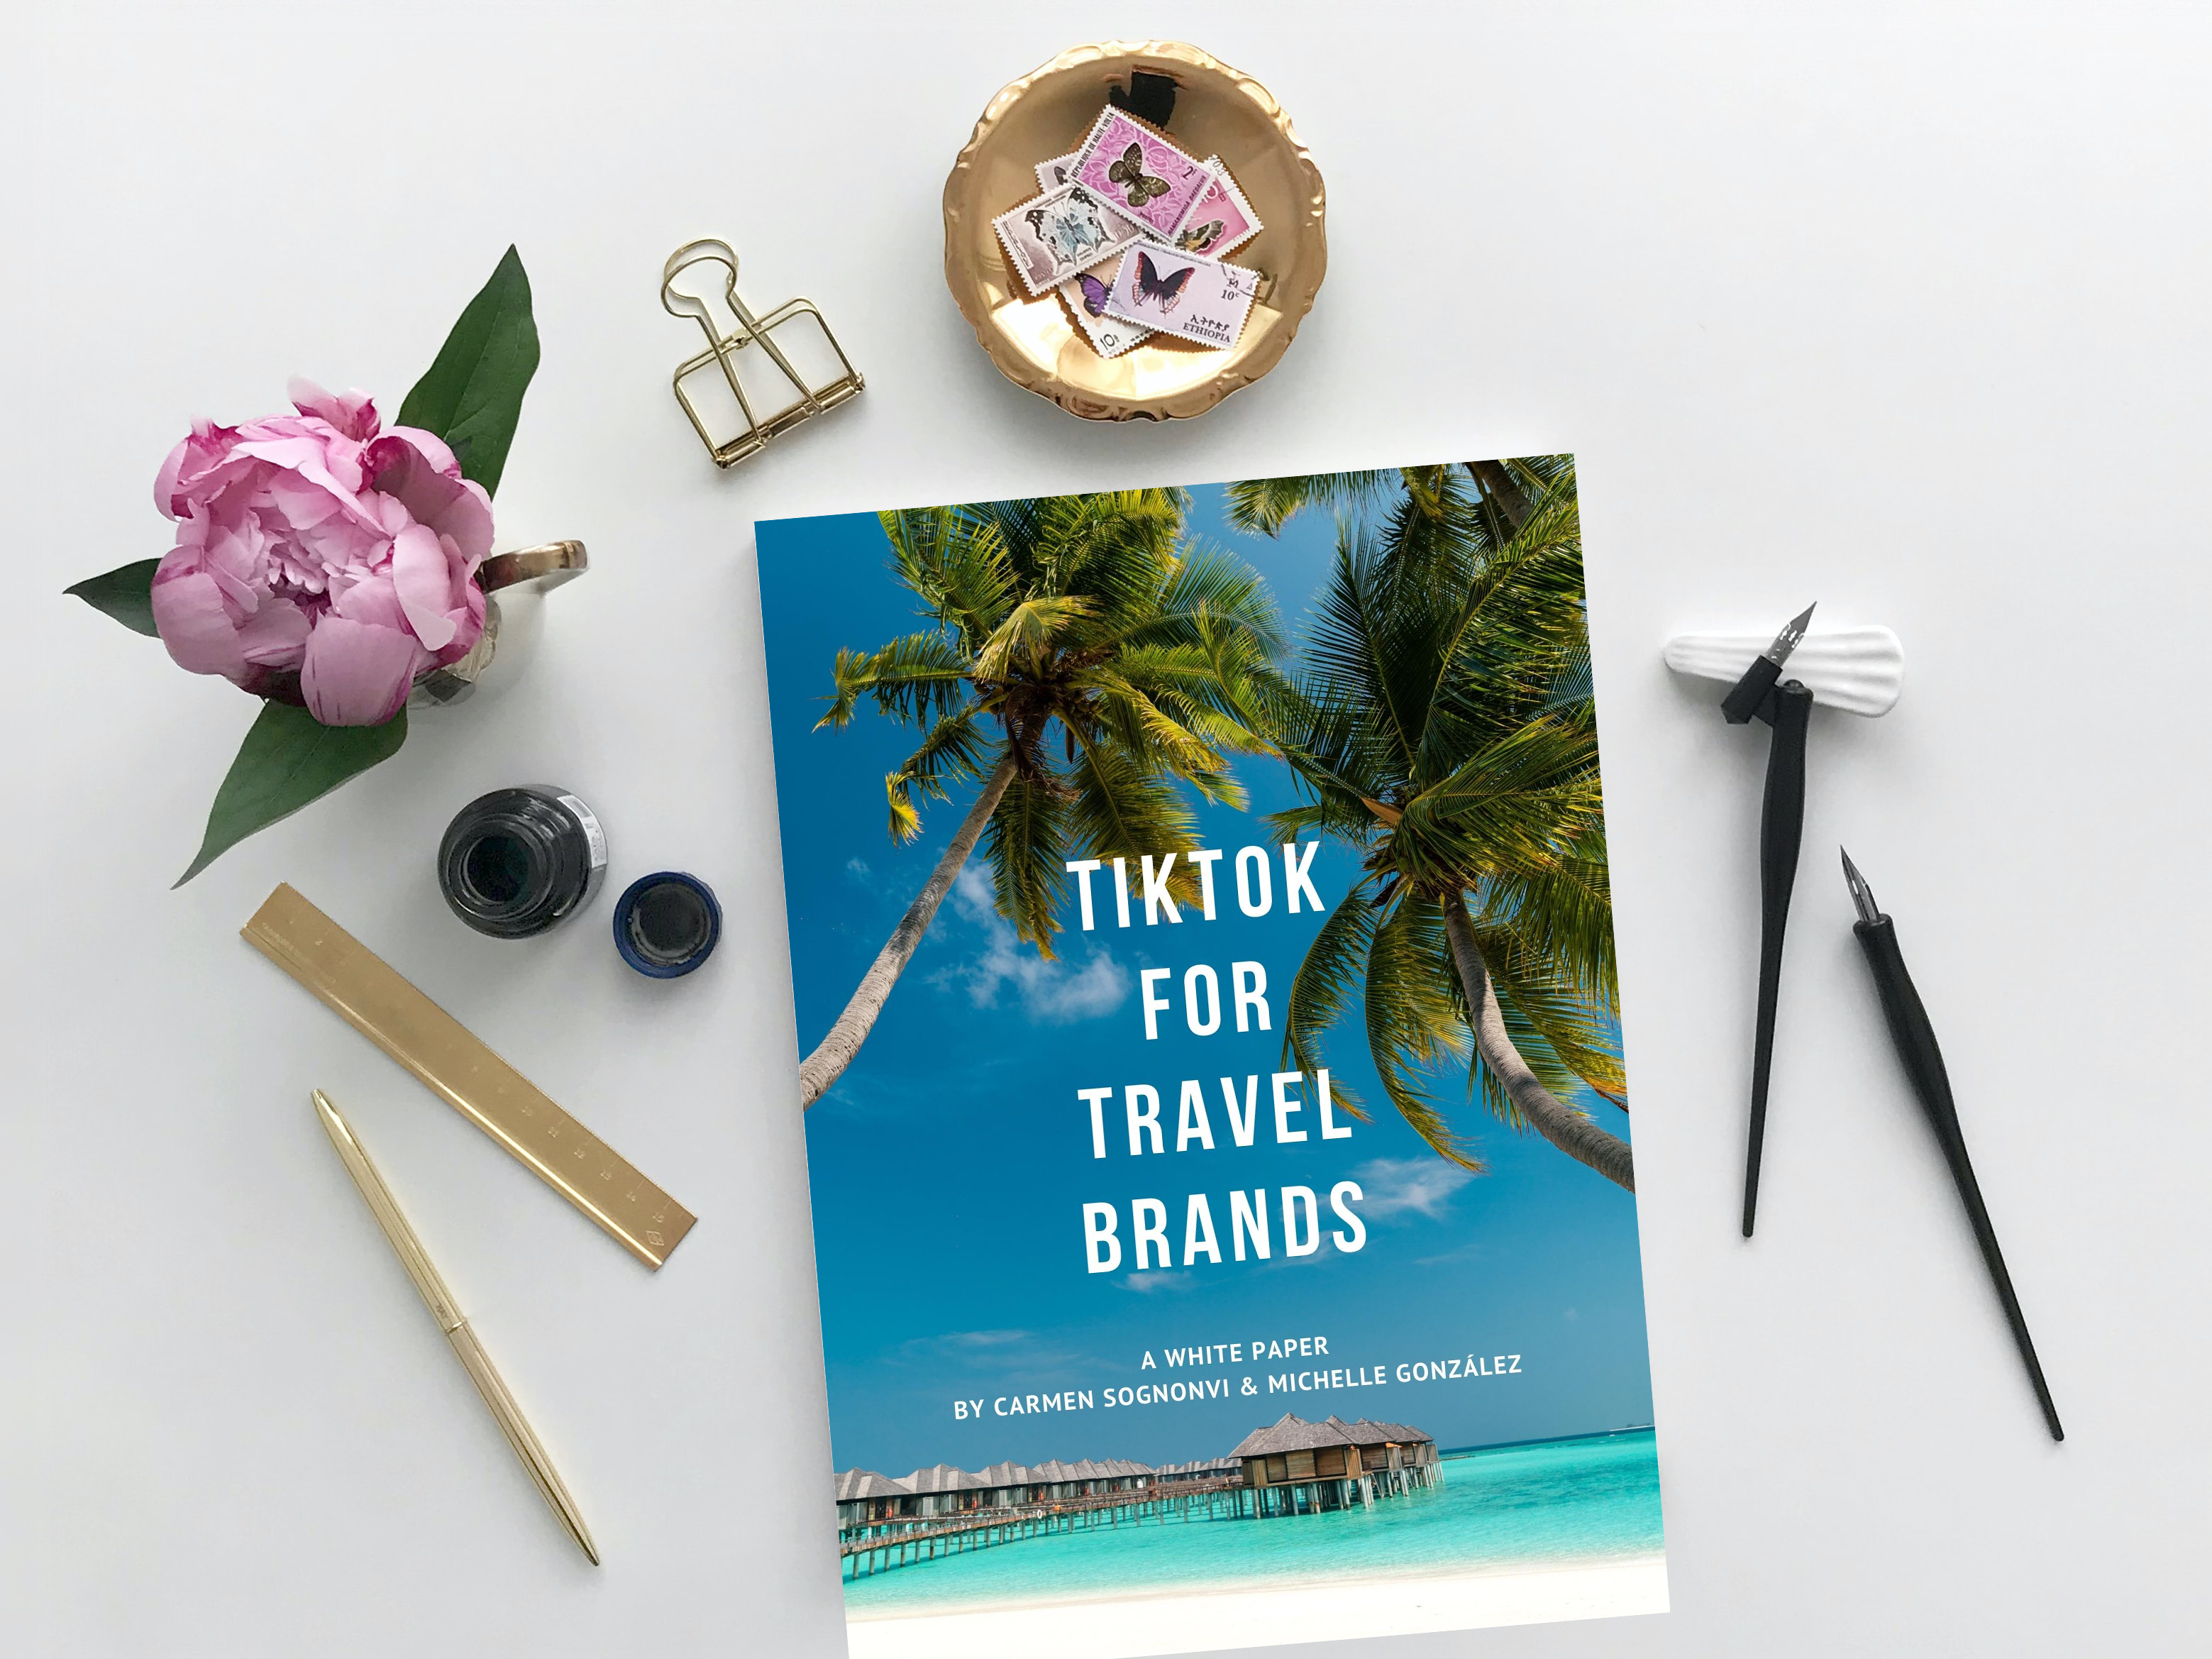 Two TikTok Travel Creators Reveal Their BestKept Secrets to Help